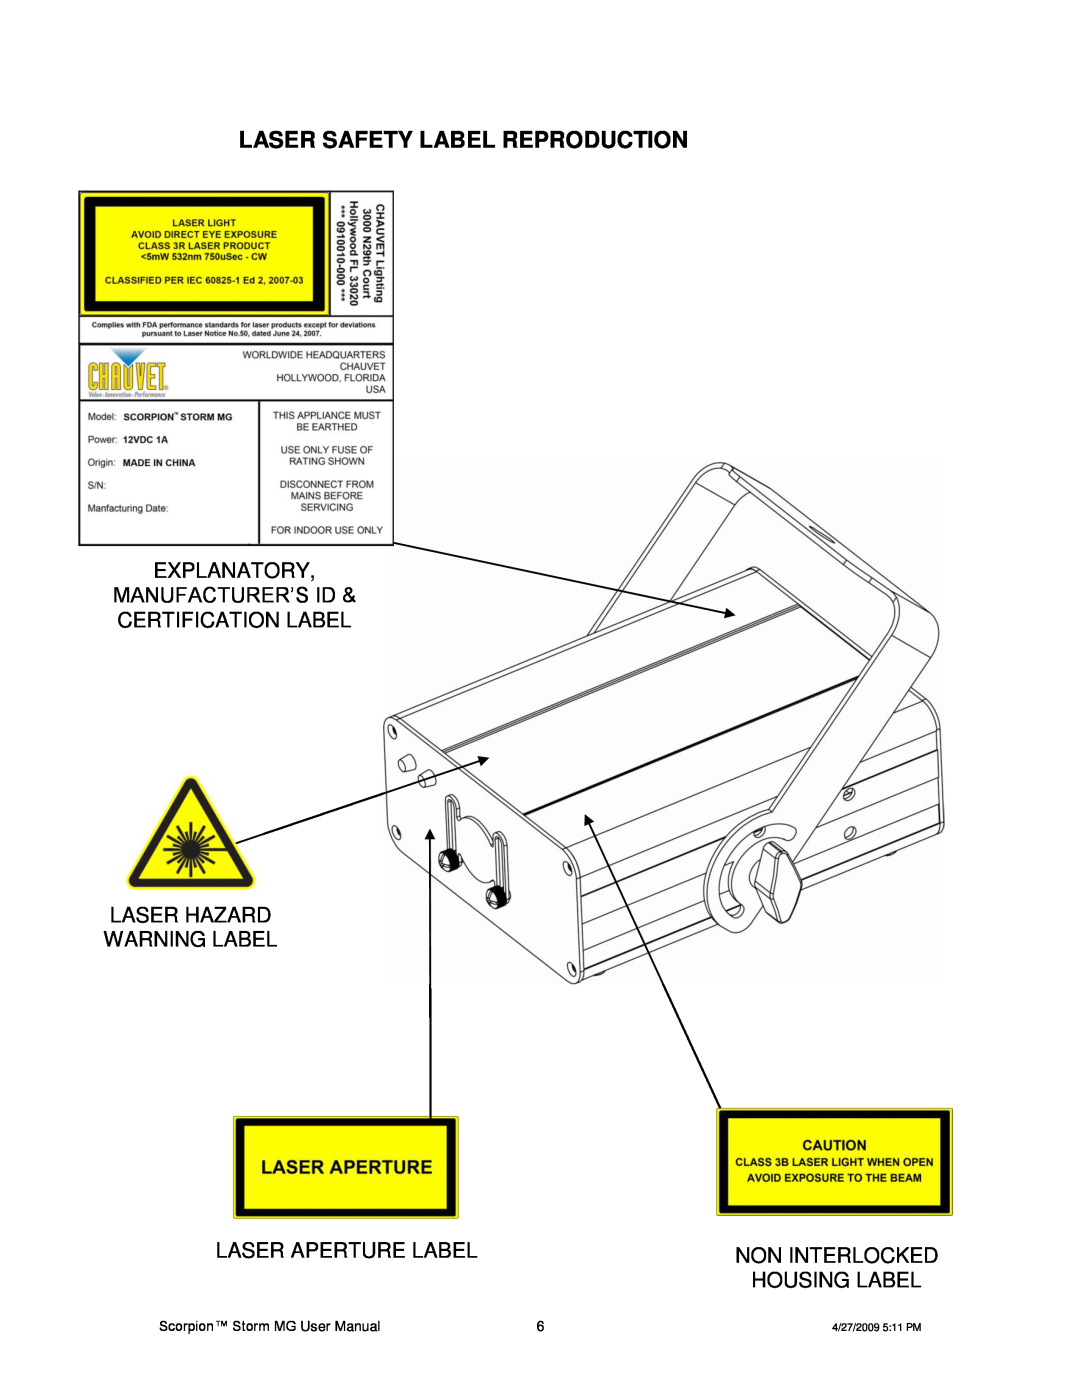 Chauvet CHAOVET Laser Safety Label Reproduction, Explanatory Manufacturer’S Id, Laser Aperture Label, Non Interlocked 